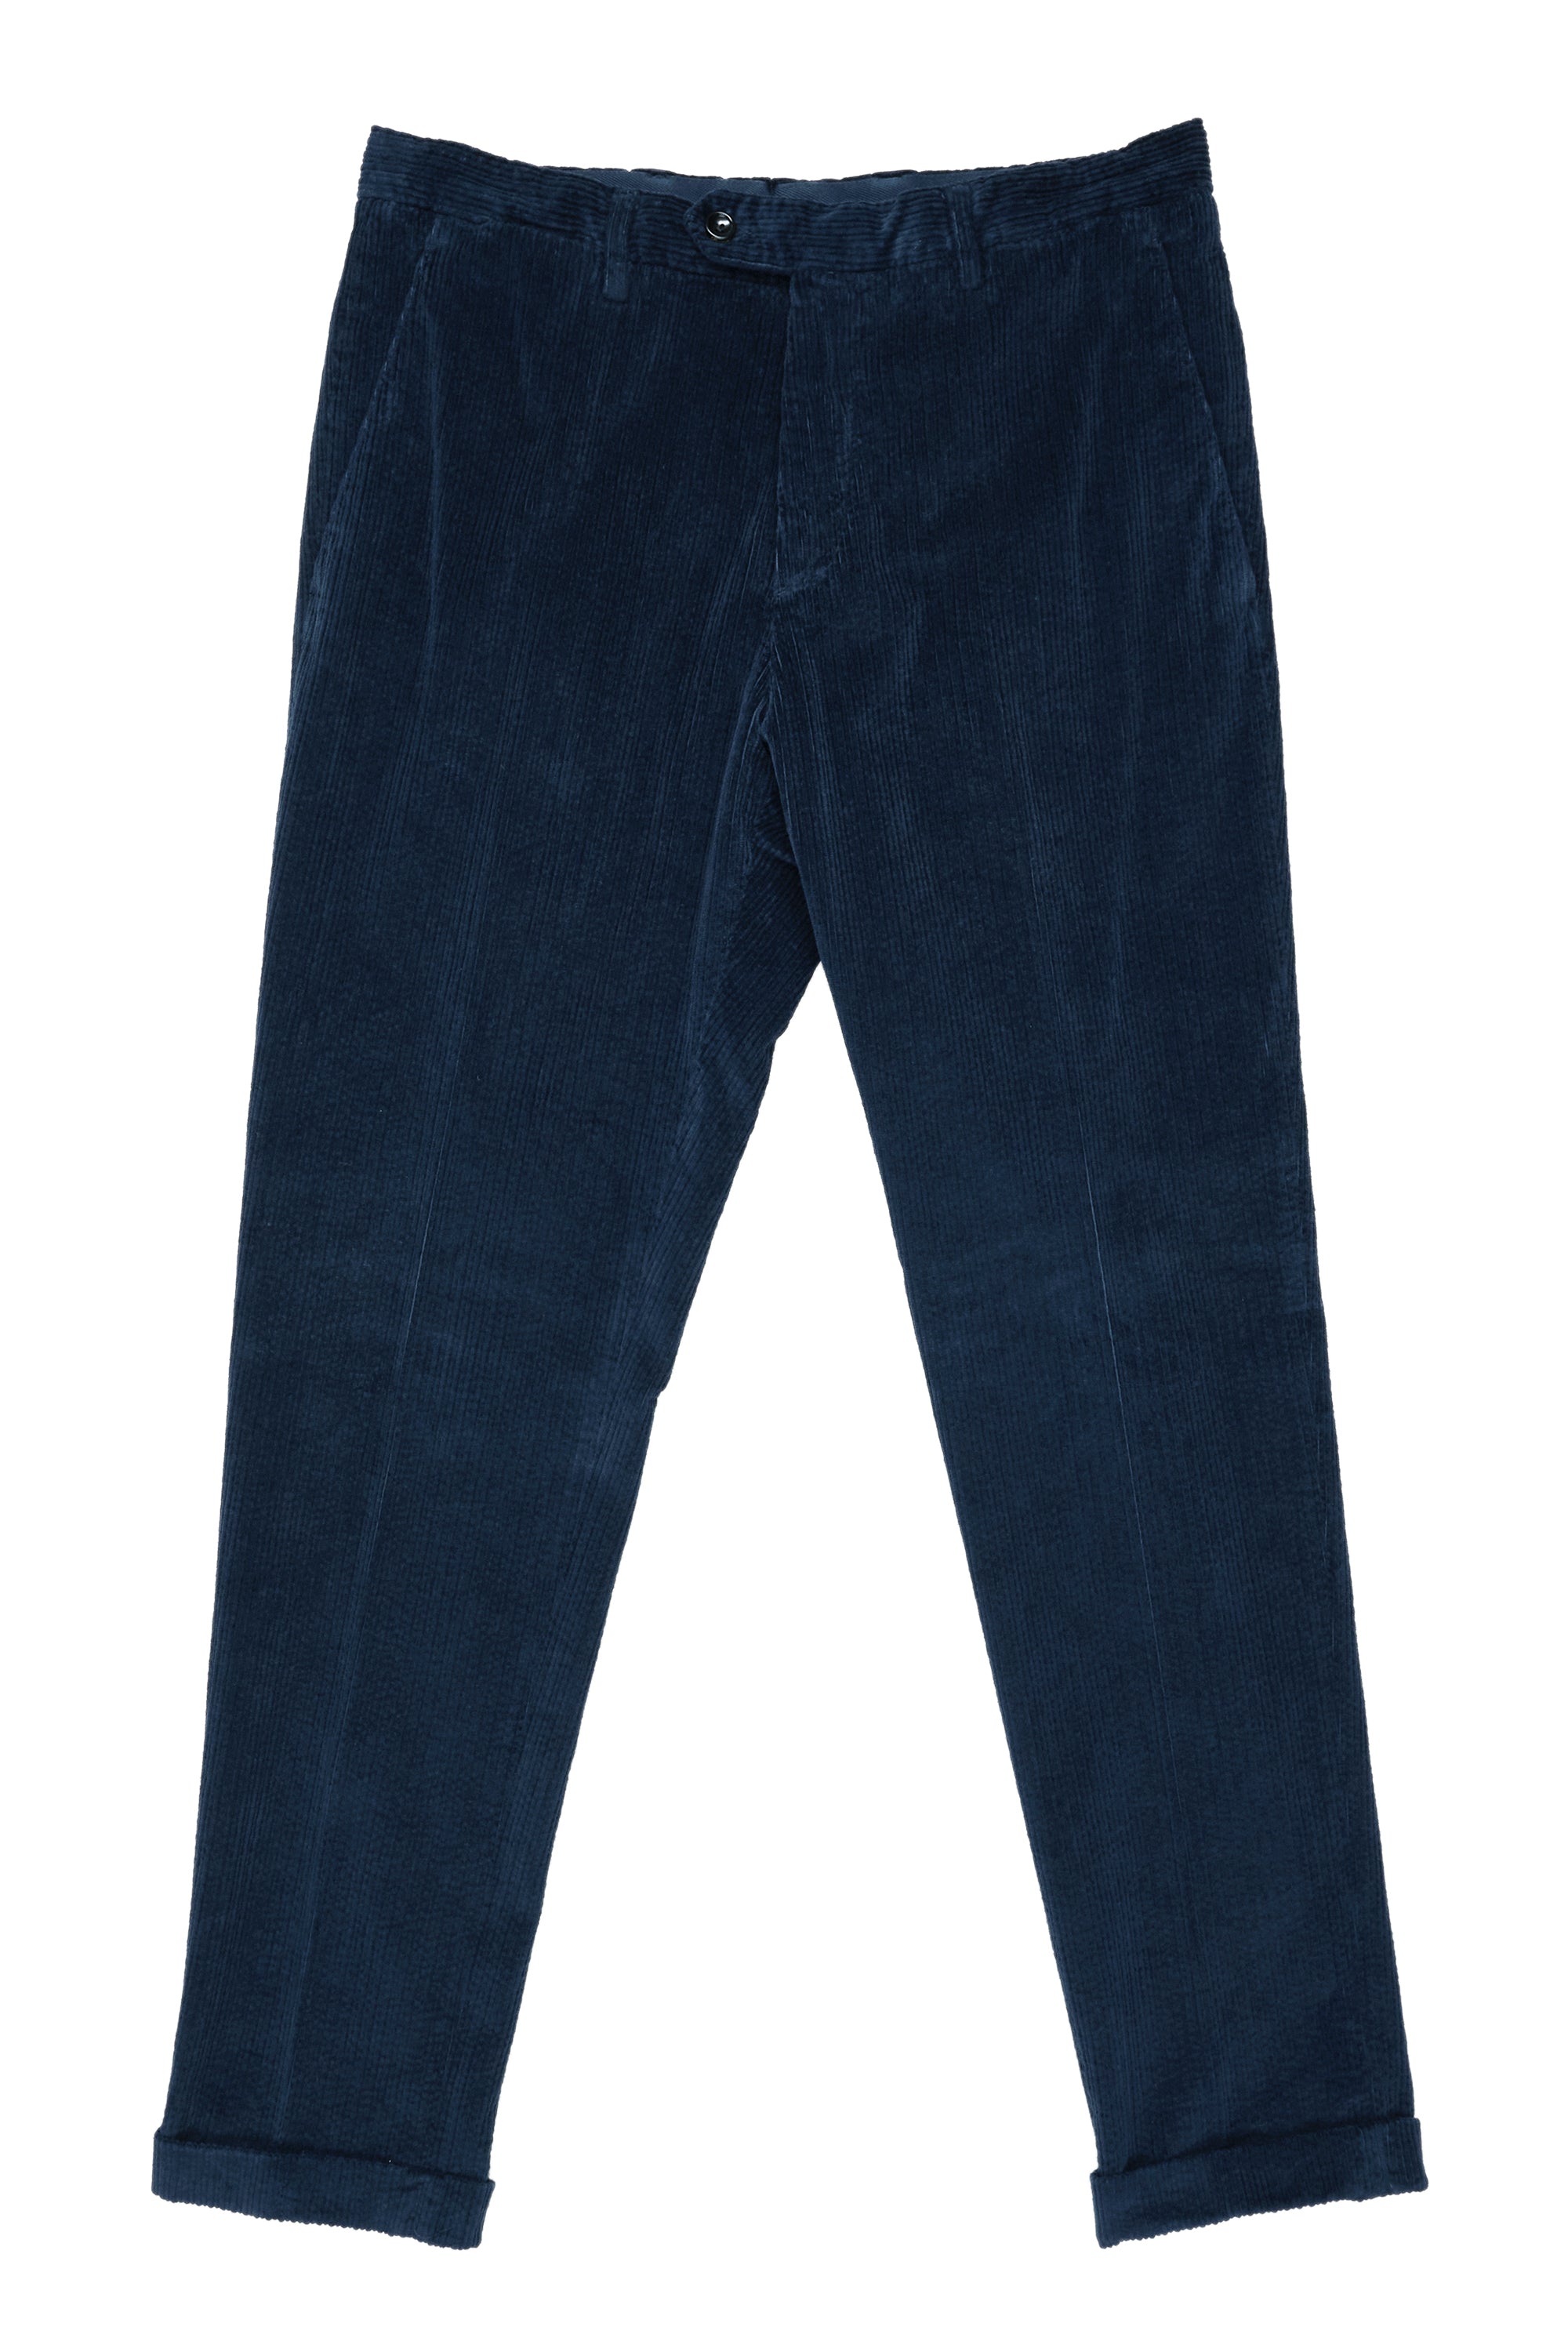 Drumohr Blue Cotton Corduroy Trousers